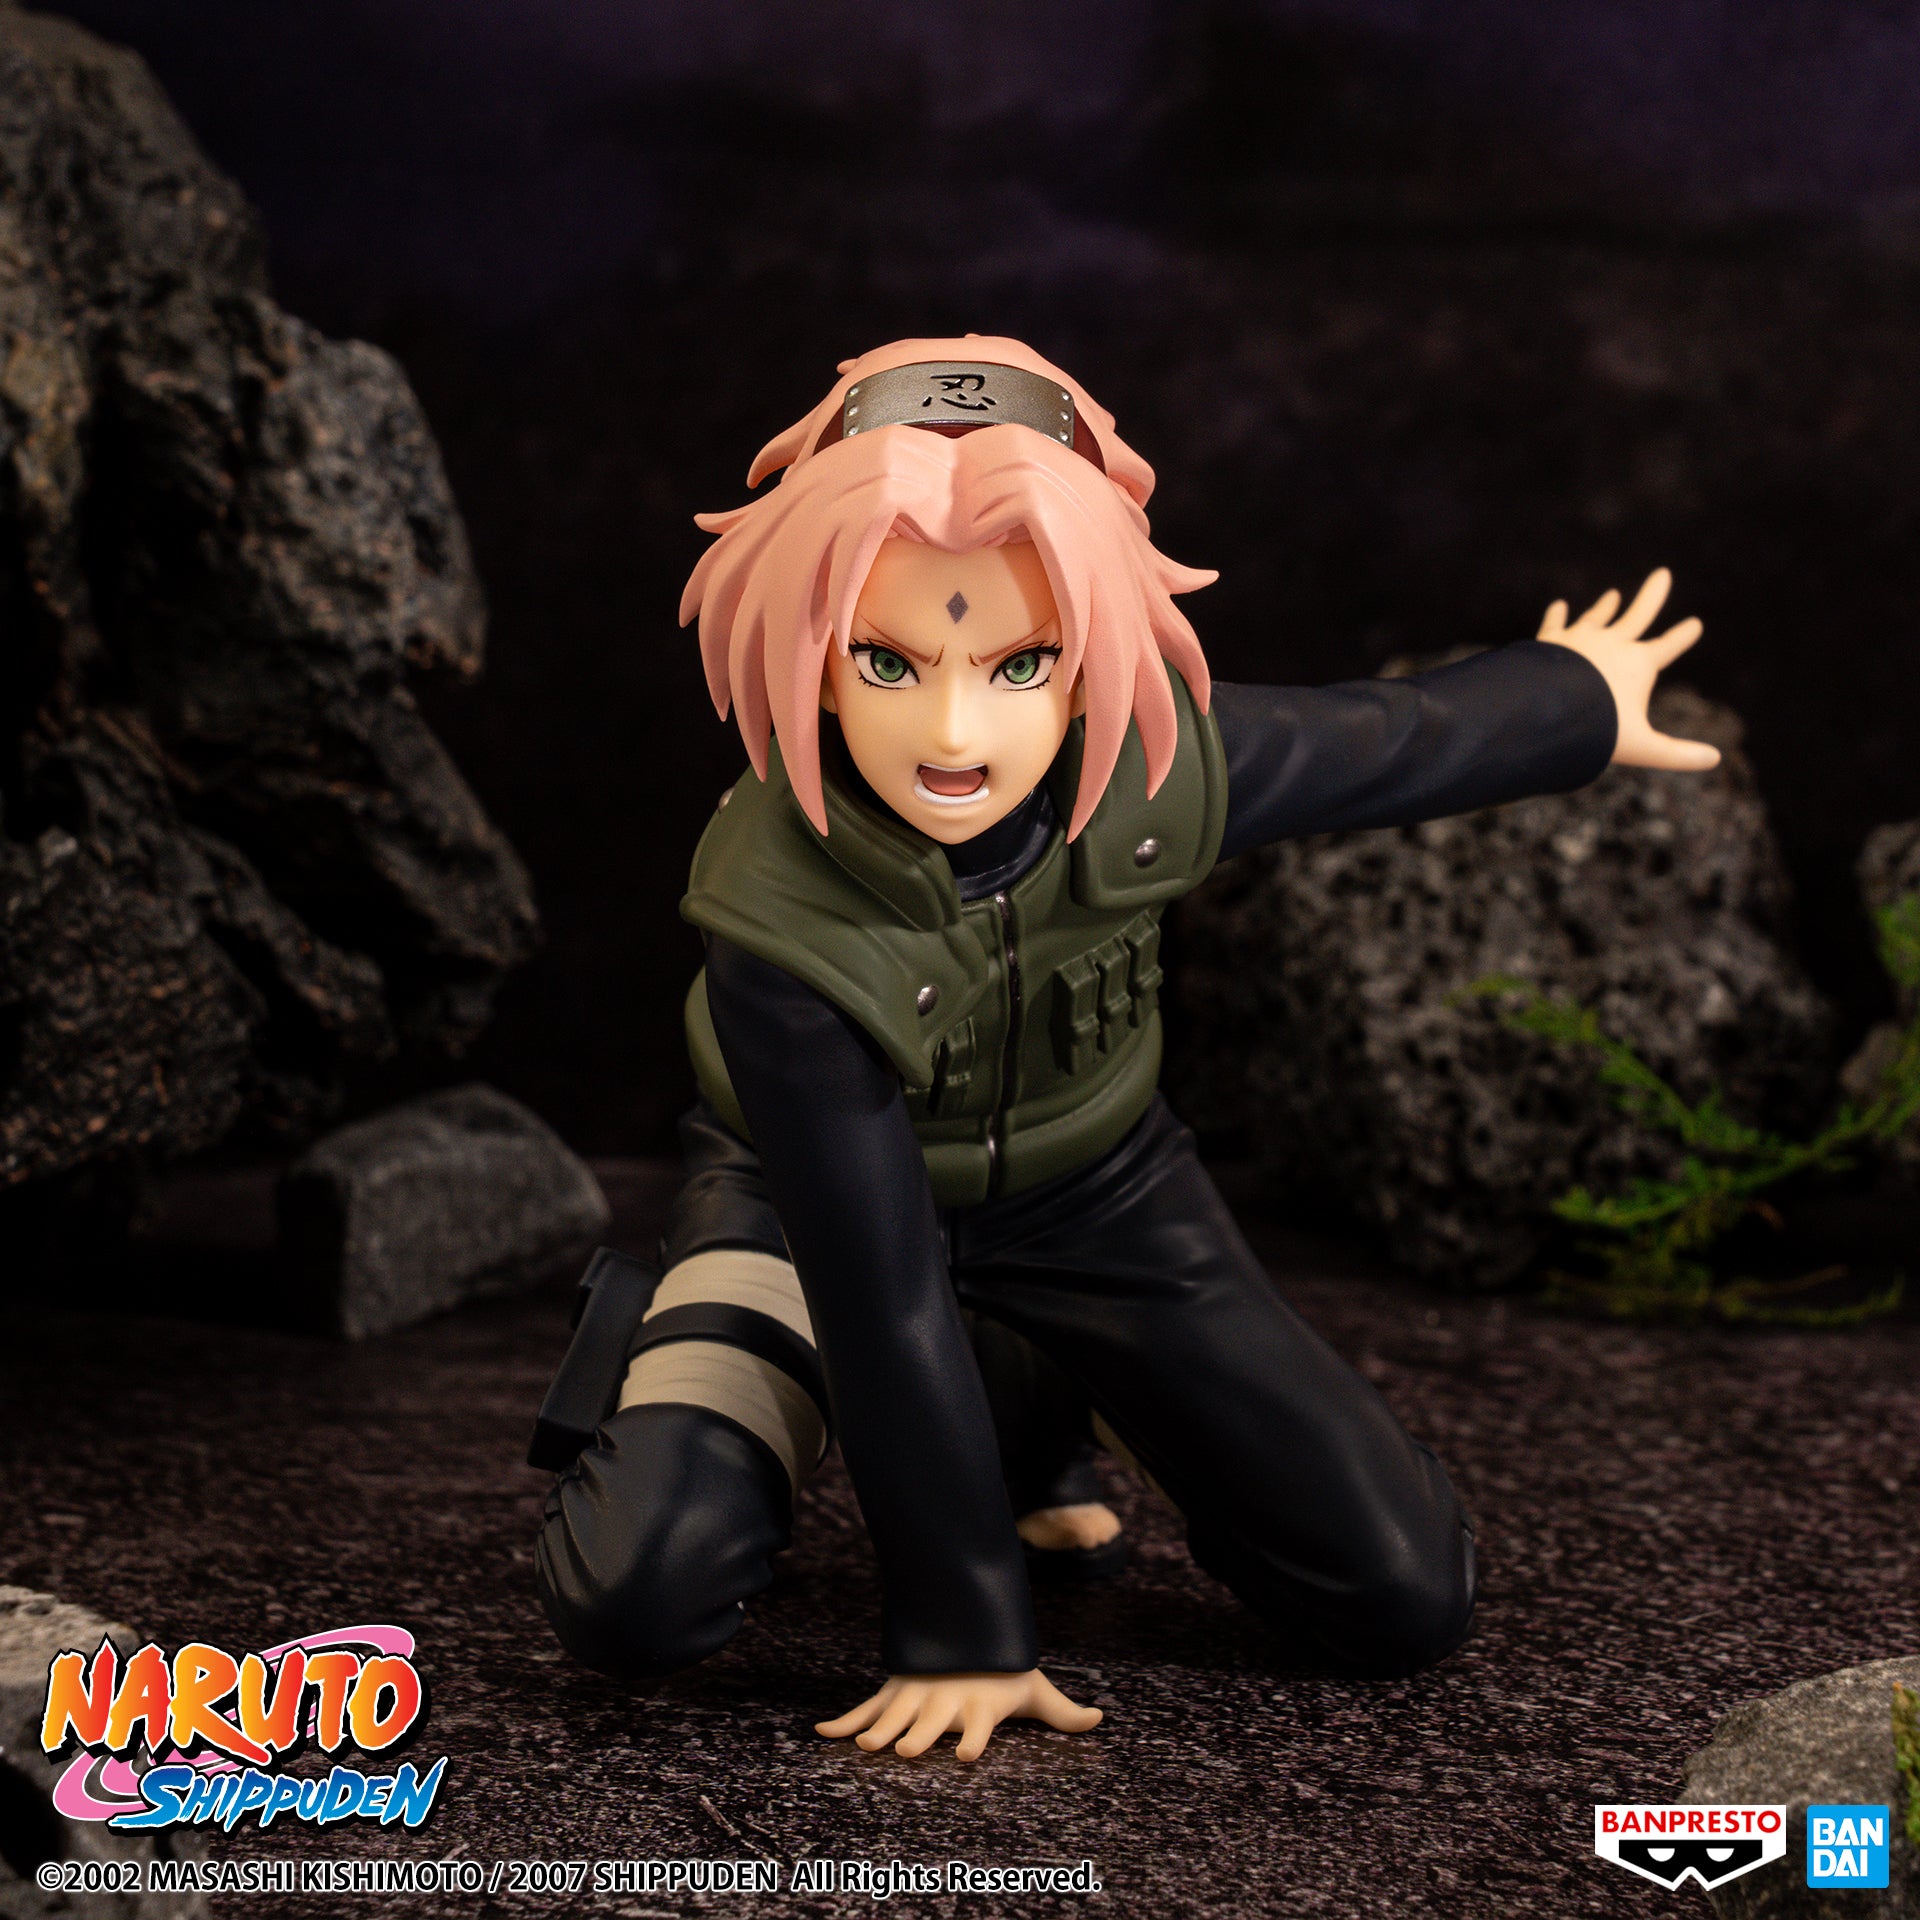 Naruto Shippuden - Haruno Sakura Panel Spectacle Figure image count 1